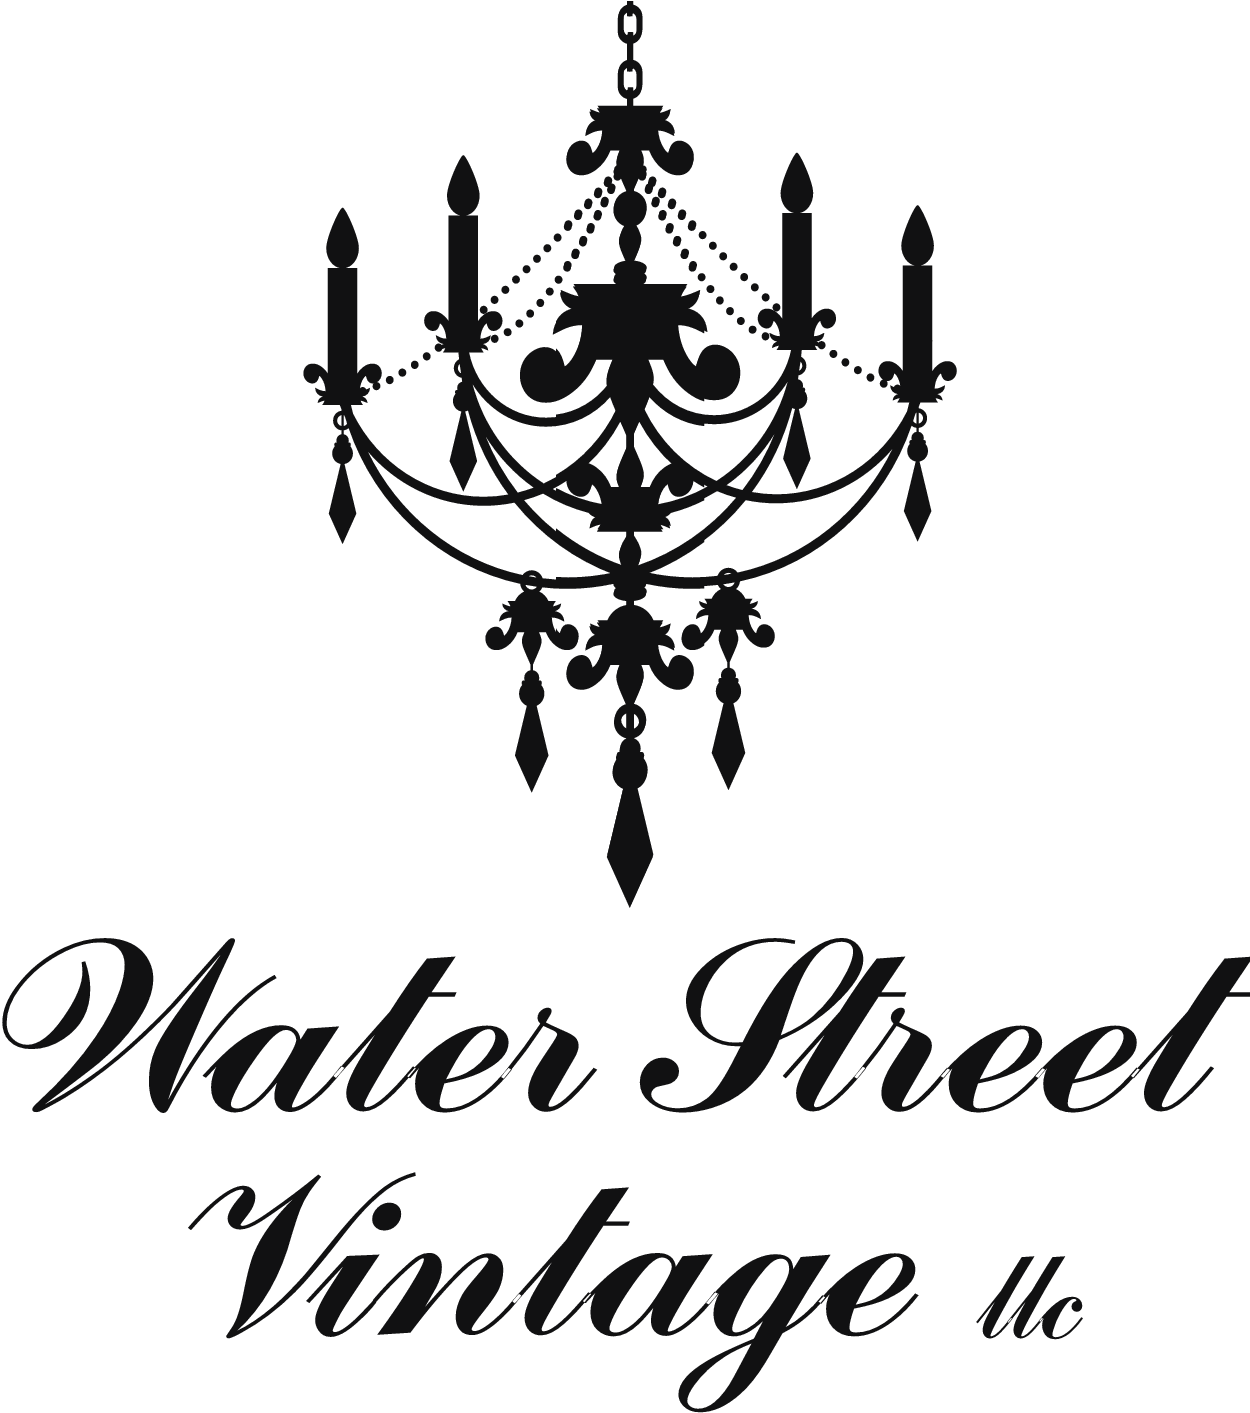 1634070202-water street logo png.png